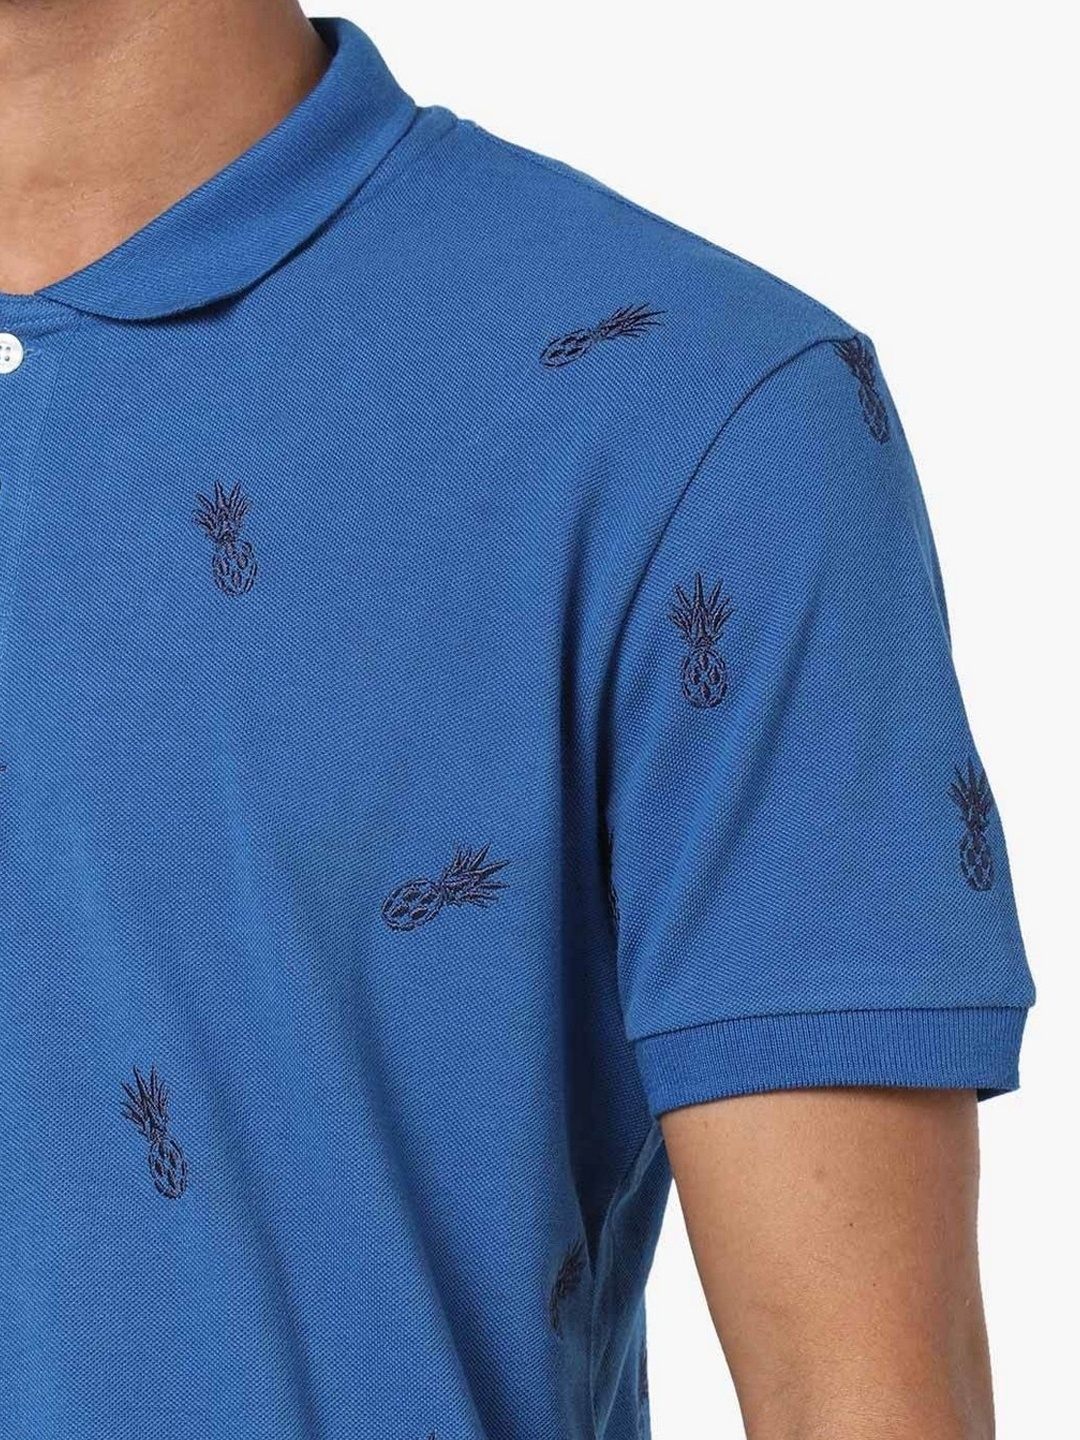 Ralph Pineapple Printed Slim Fit Polo T-shirt